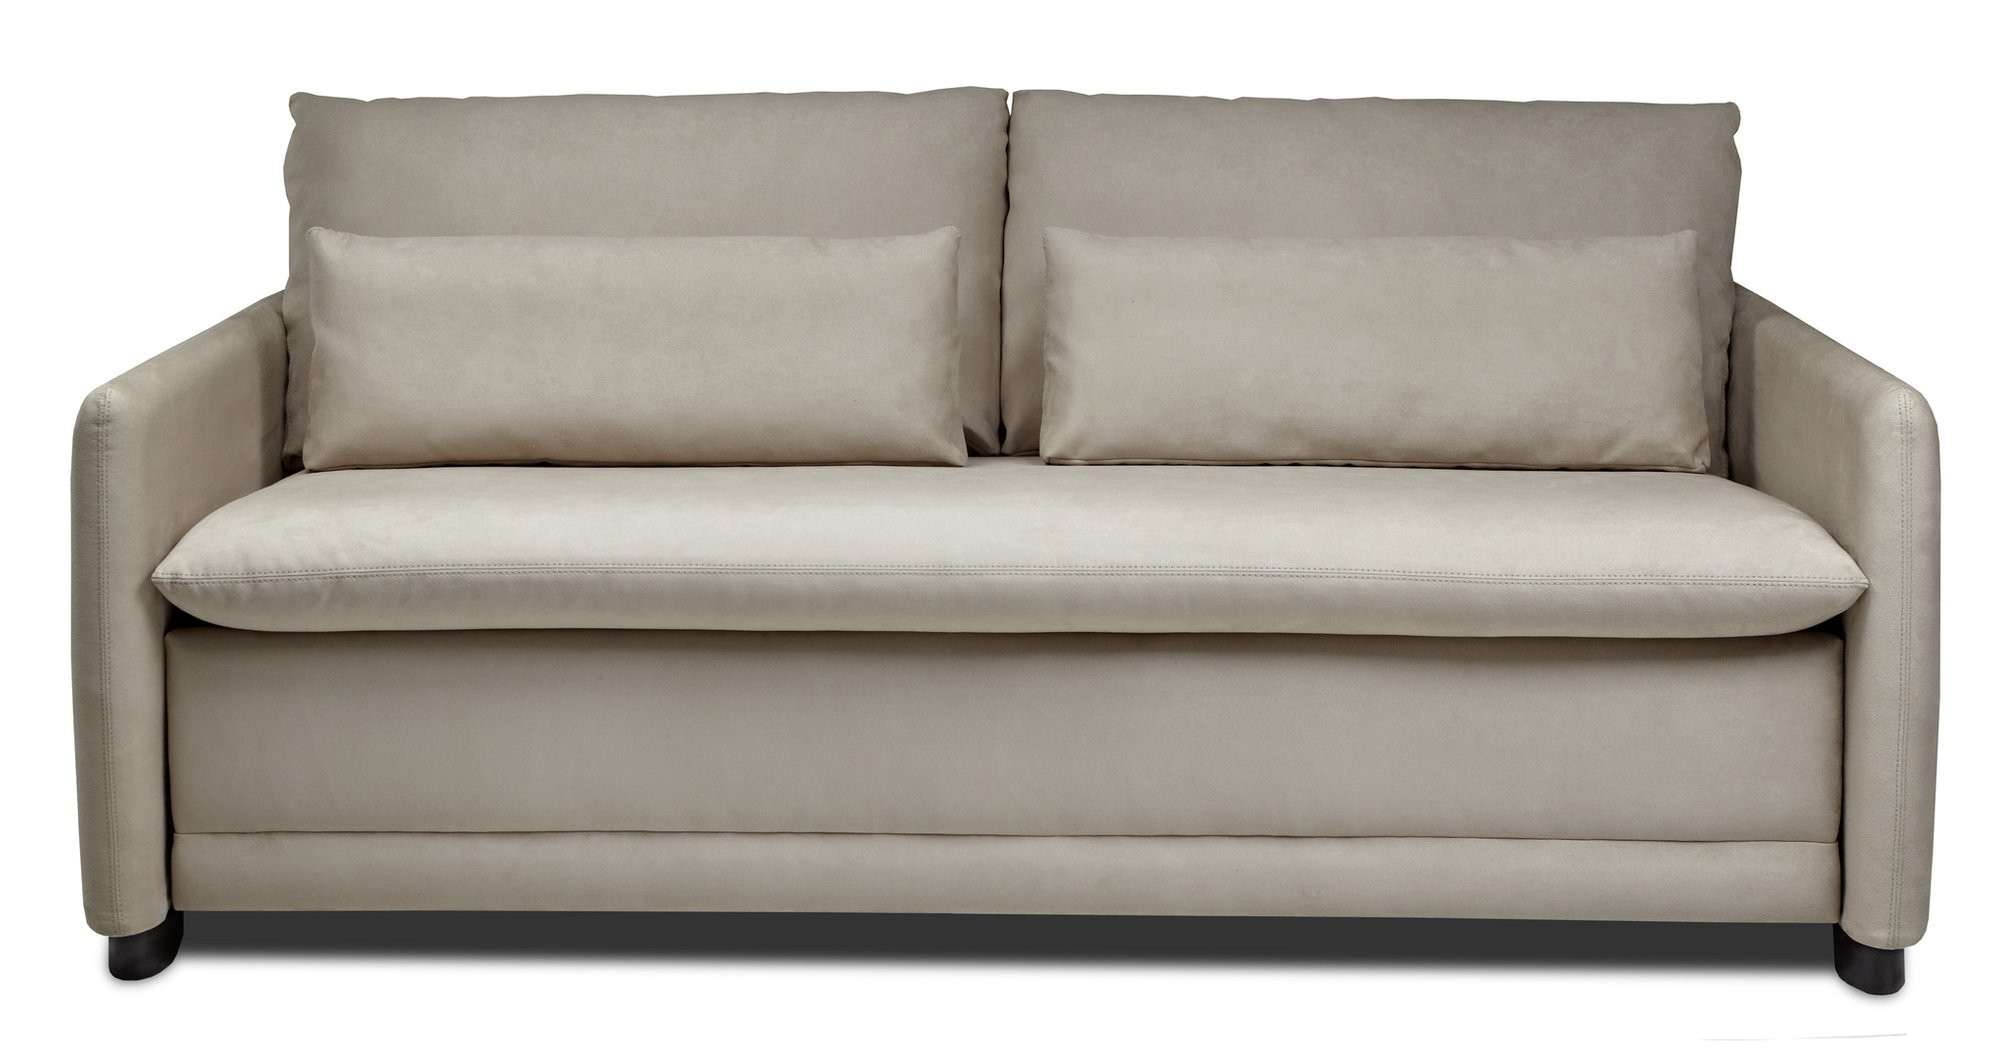 american leather sleeper sofa tempurpedic